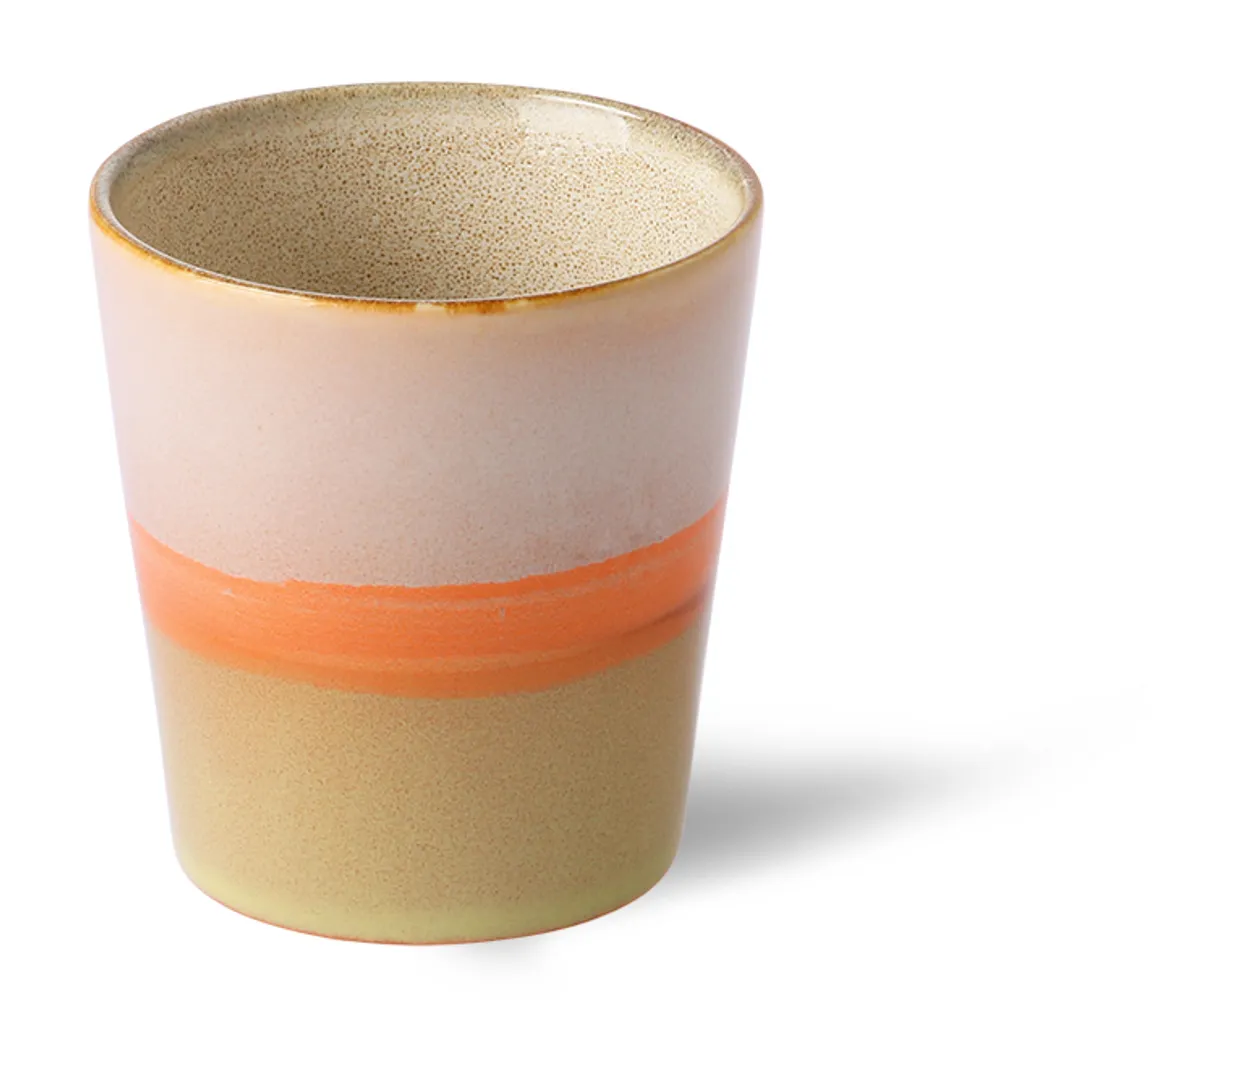 70s ceramics: coffee mug, saturn